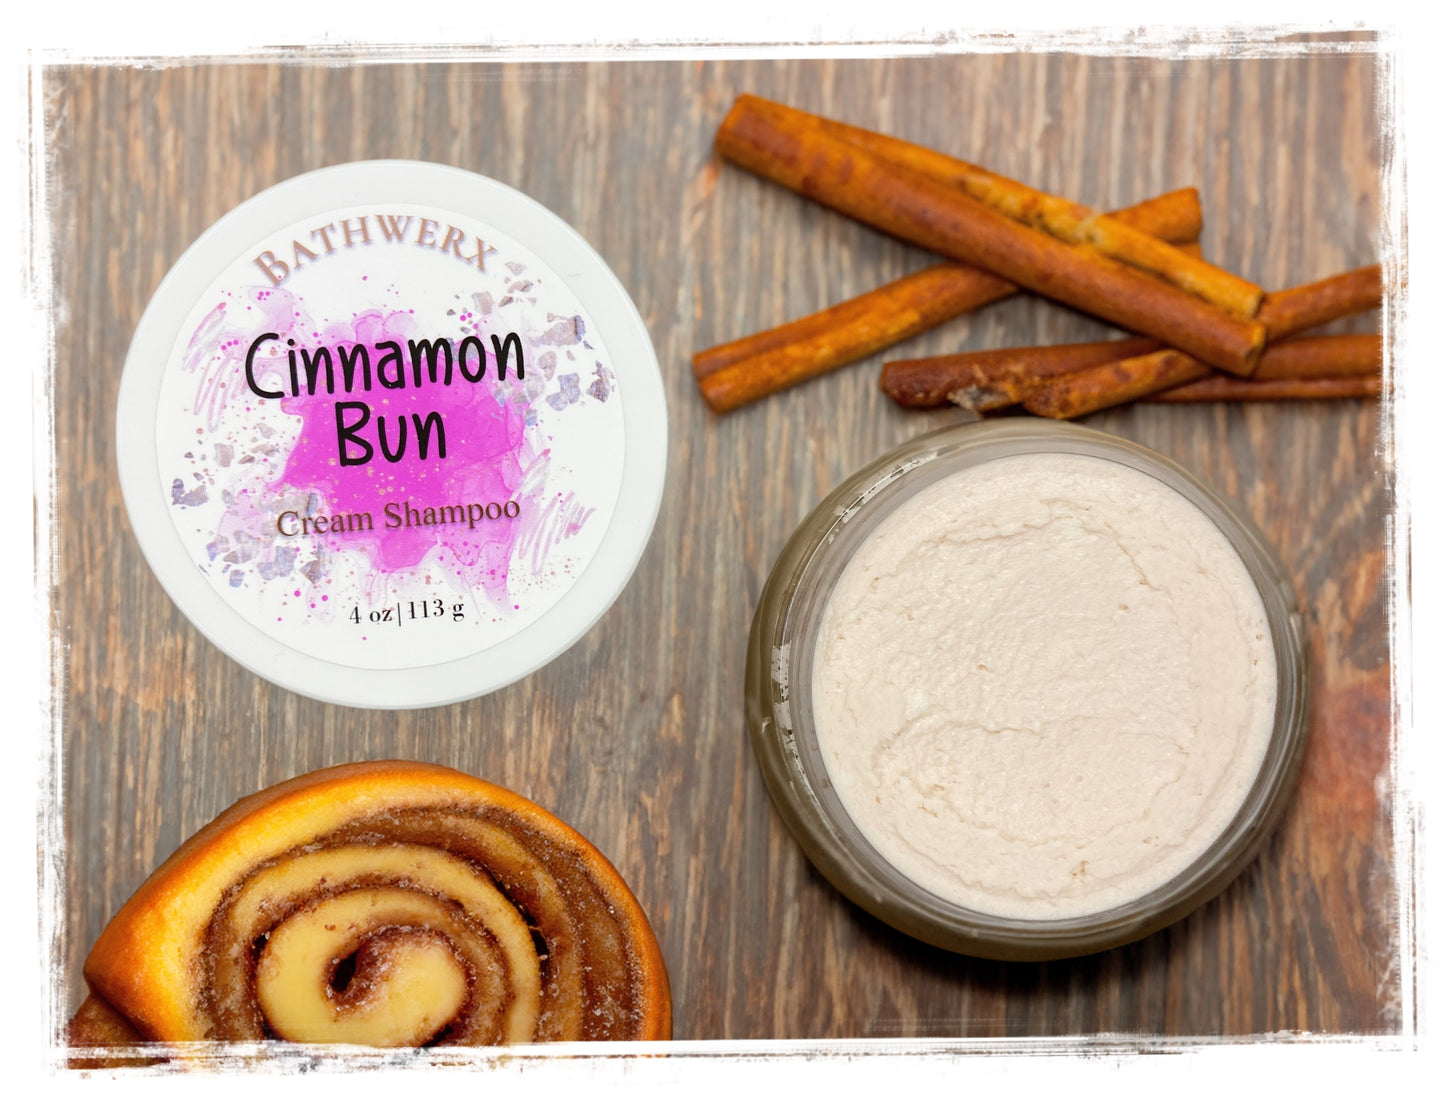 Cinnamon Bun Cream Shampoo